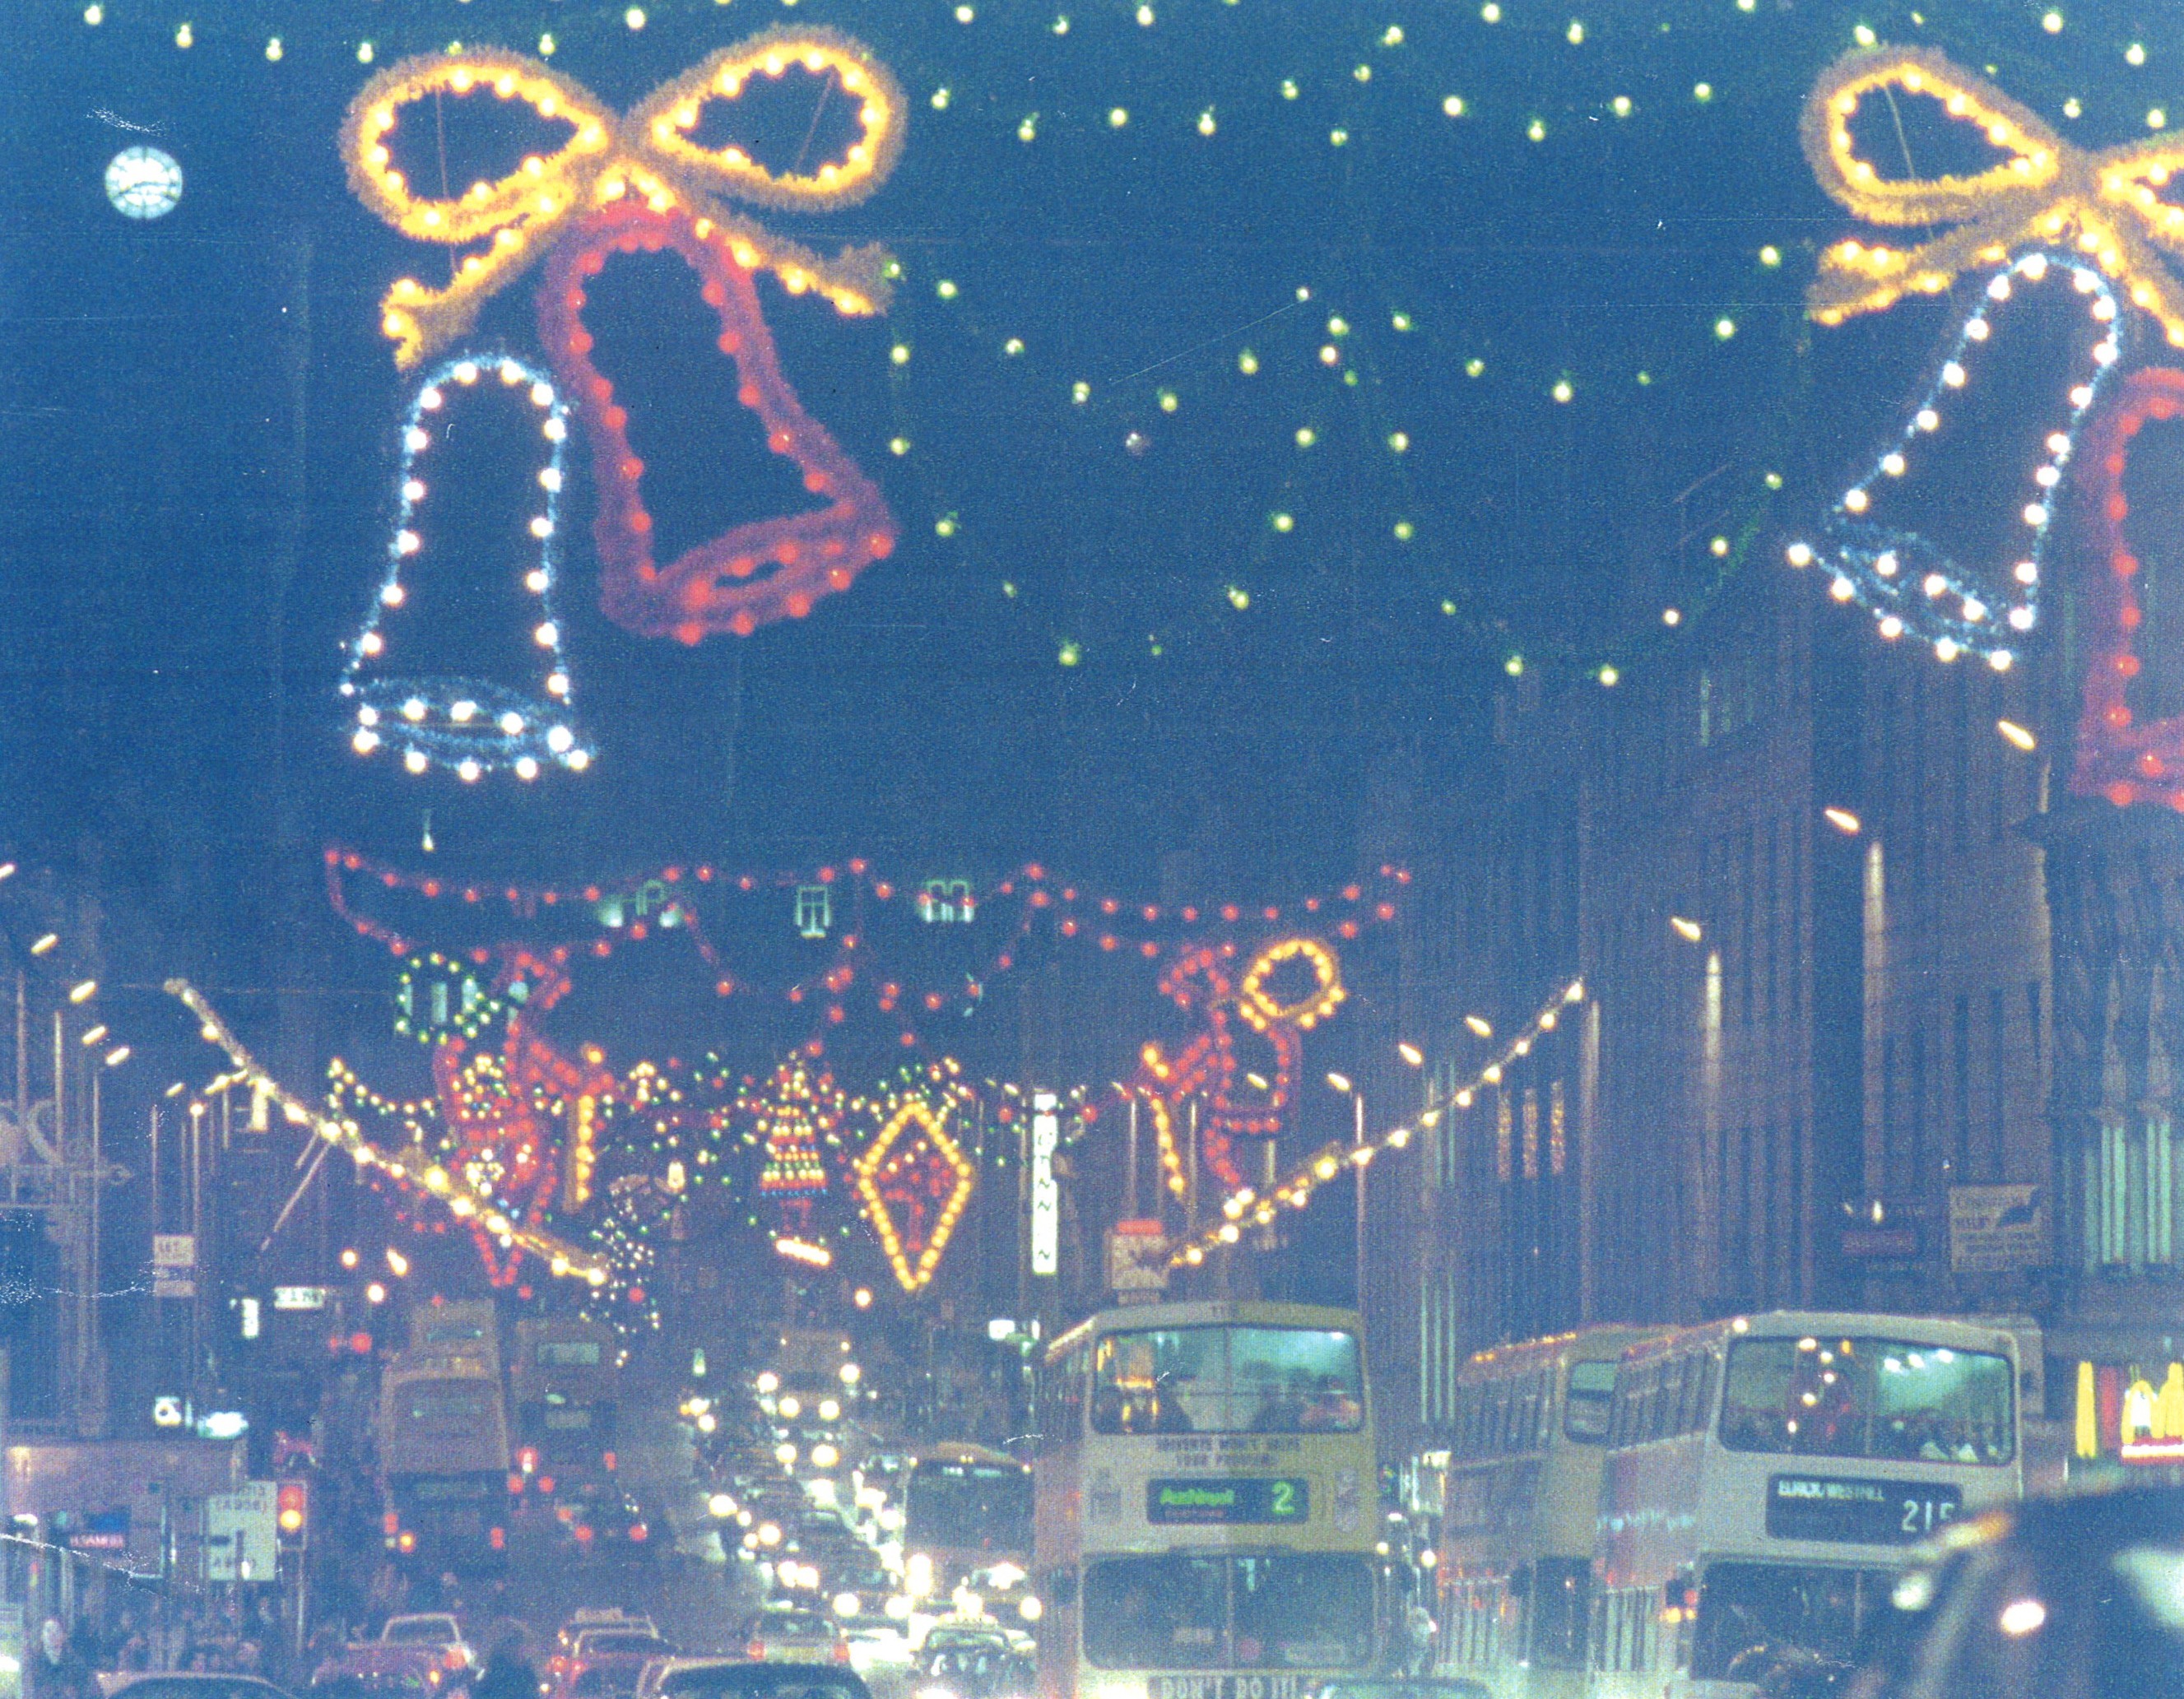 Aberdeen's lights in 1994